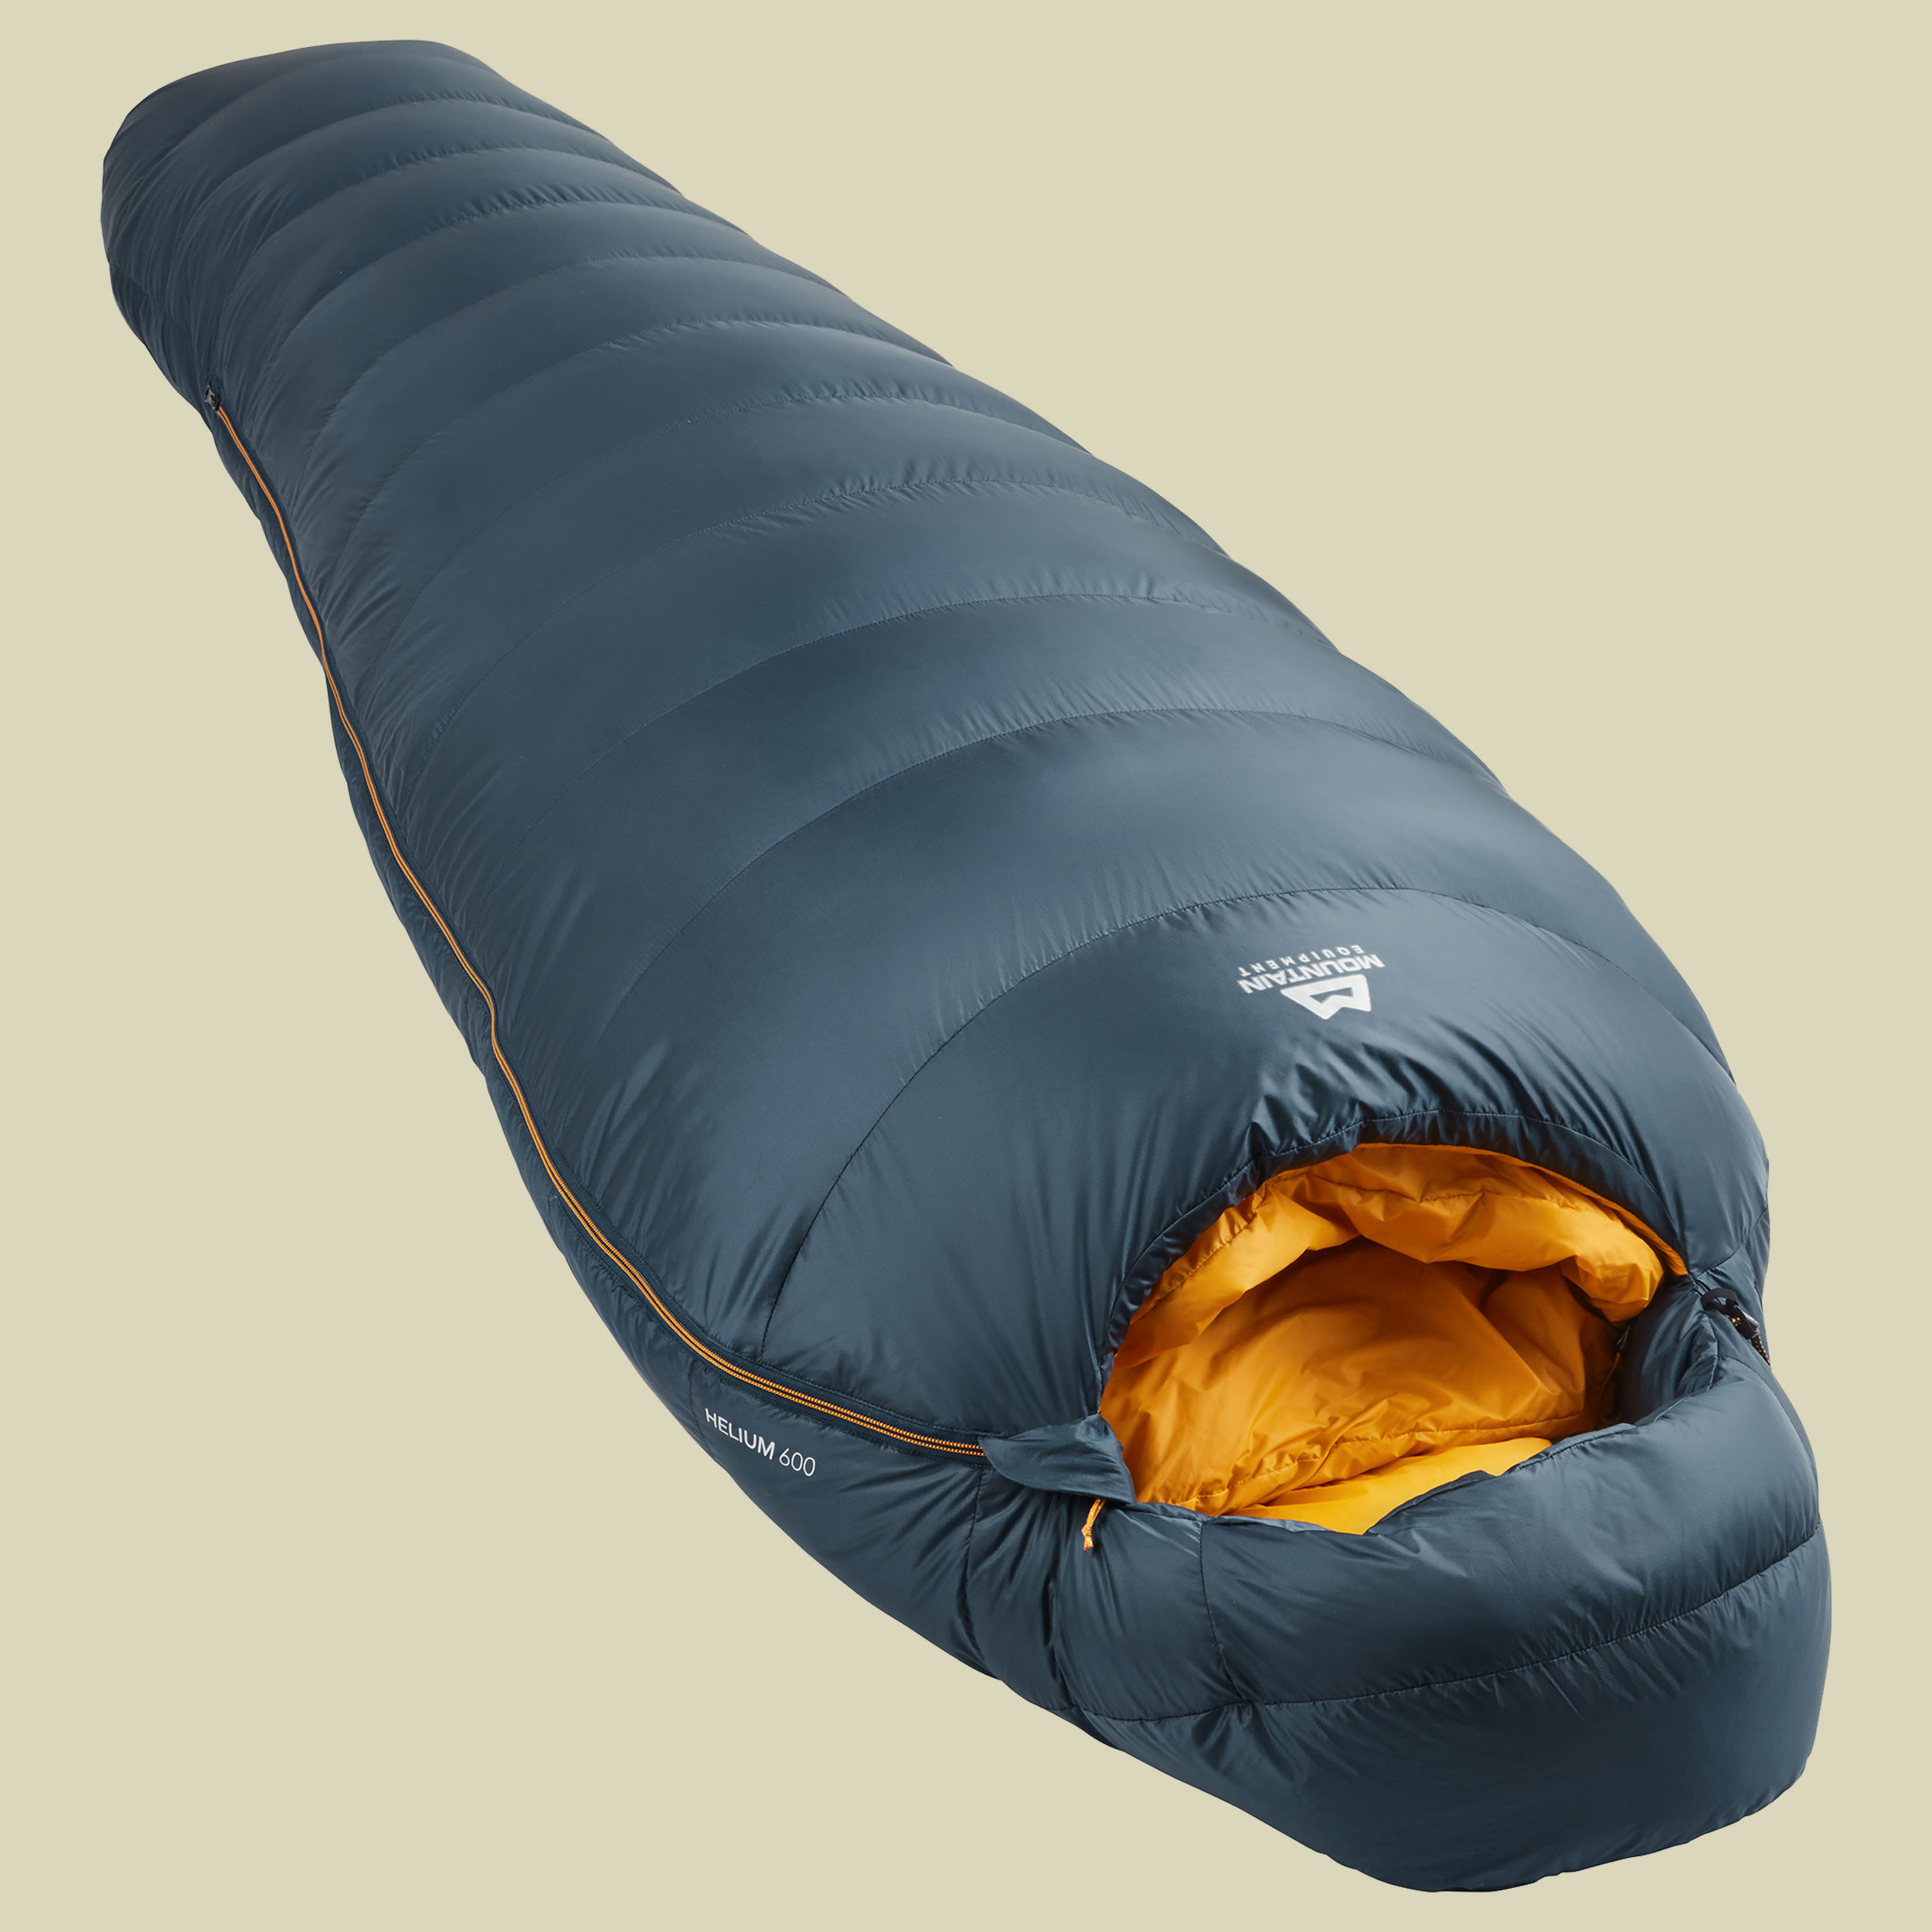 Helium 600 Schlafsack Körpergröße 200 cm cm Farbe majolica blue, Schlafsack Reissverschluss links